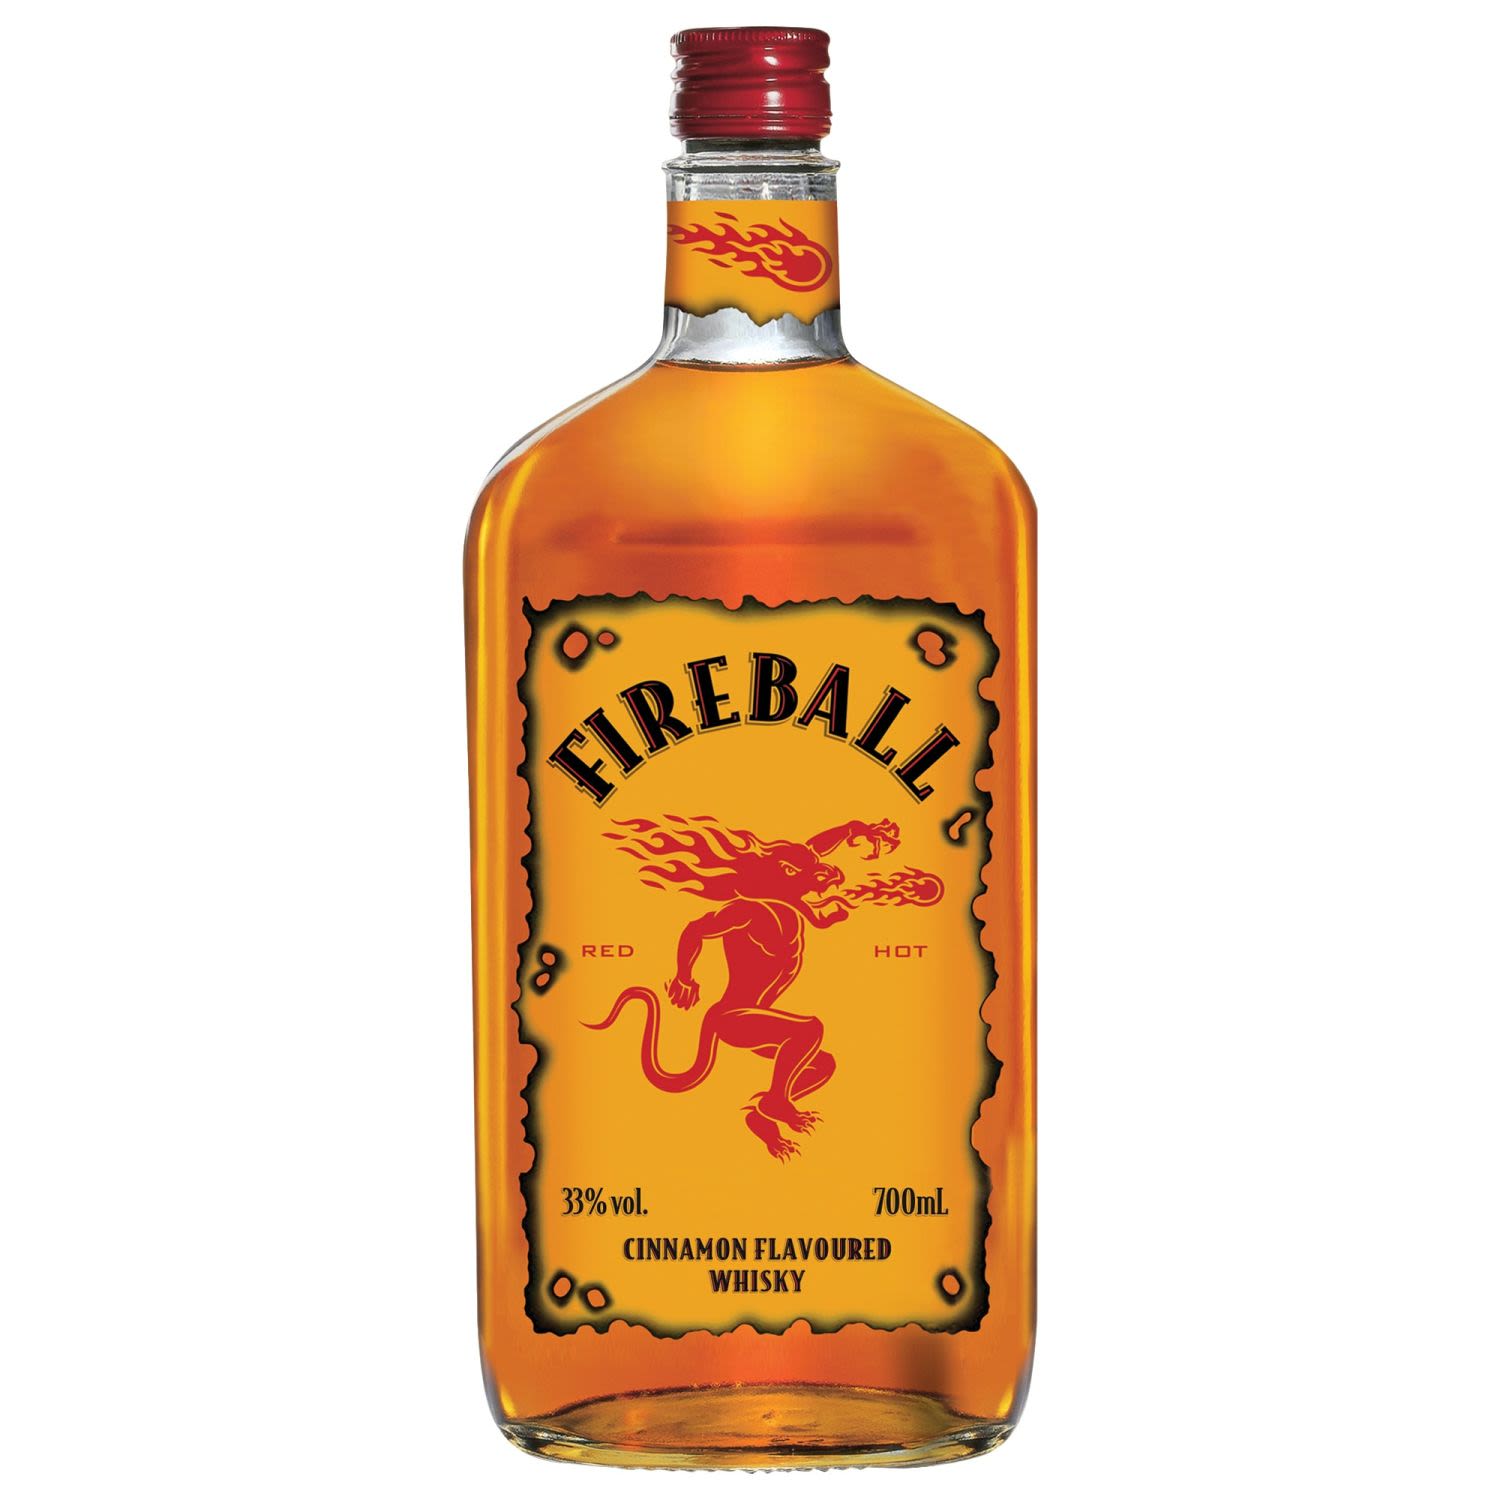 Fireball Cinnamon Flavoured Whisky 700mL Bottle